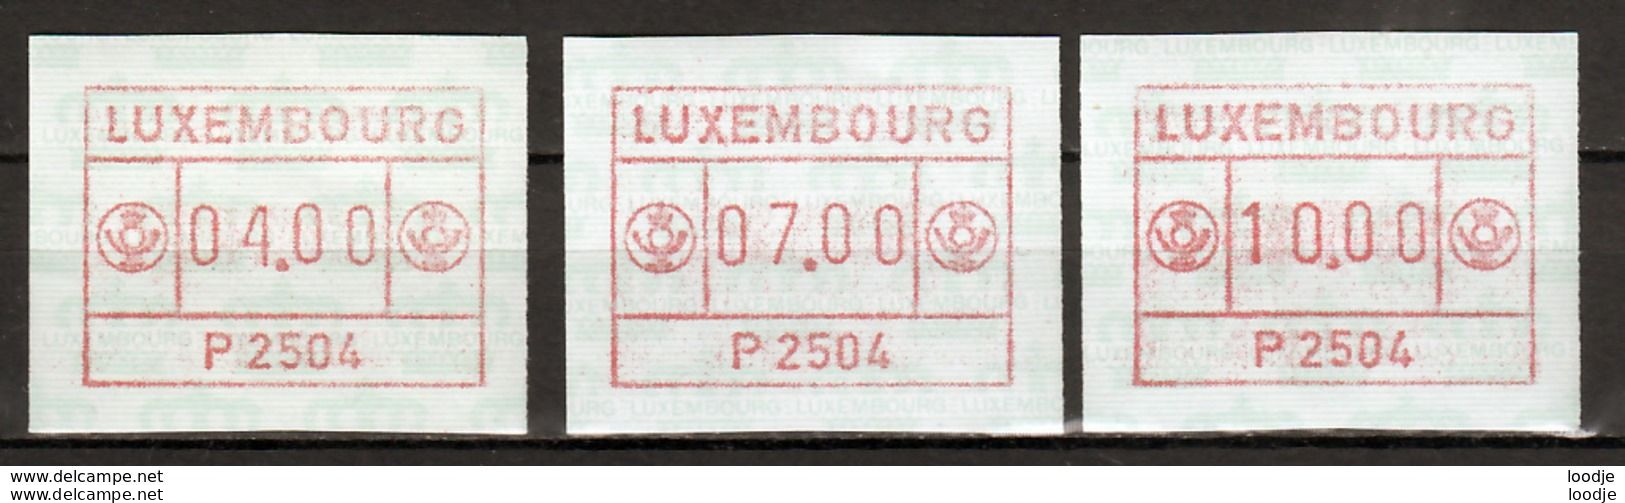 Luxemburg Automaatzegels Mi 1 Div. Postfris - Postage Labels